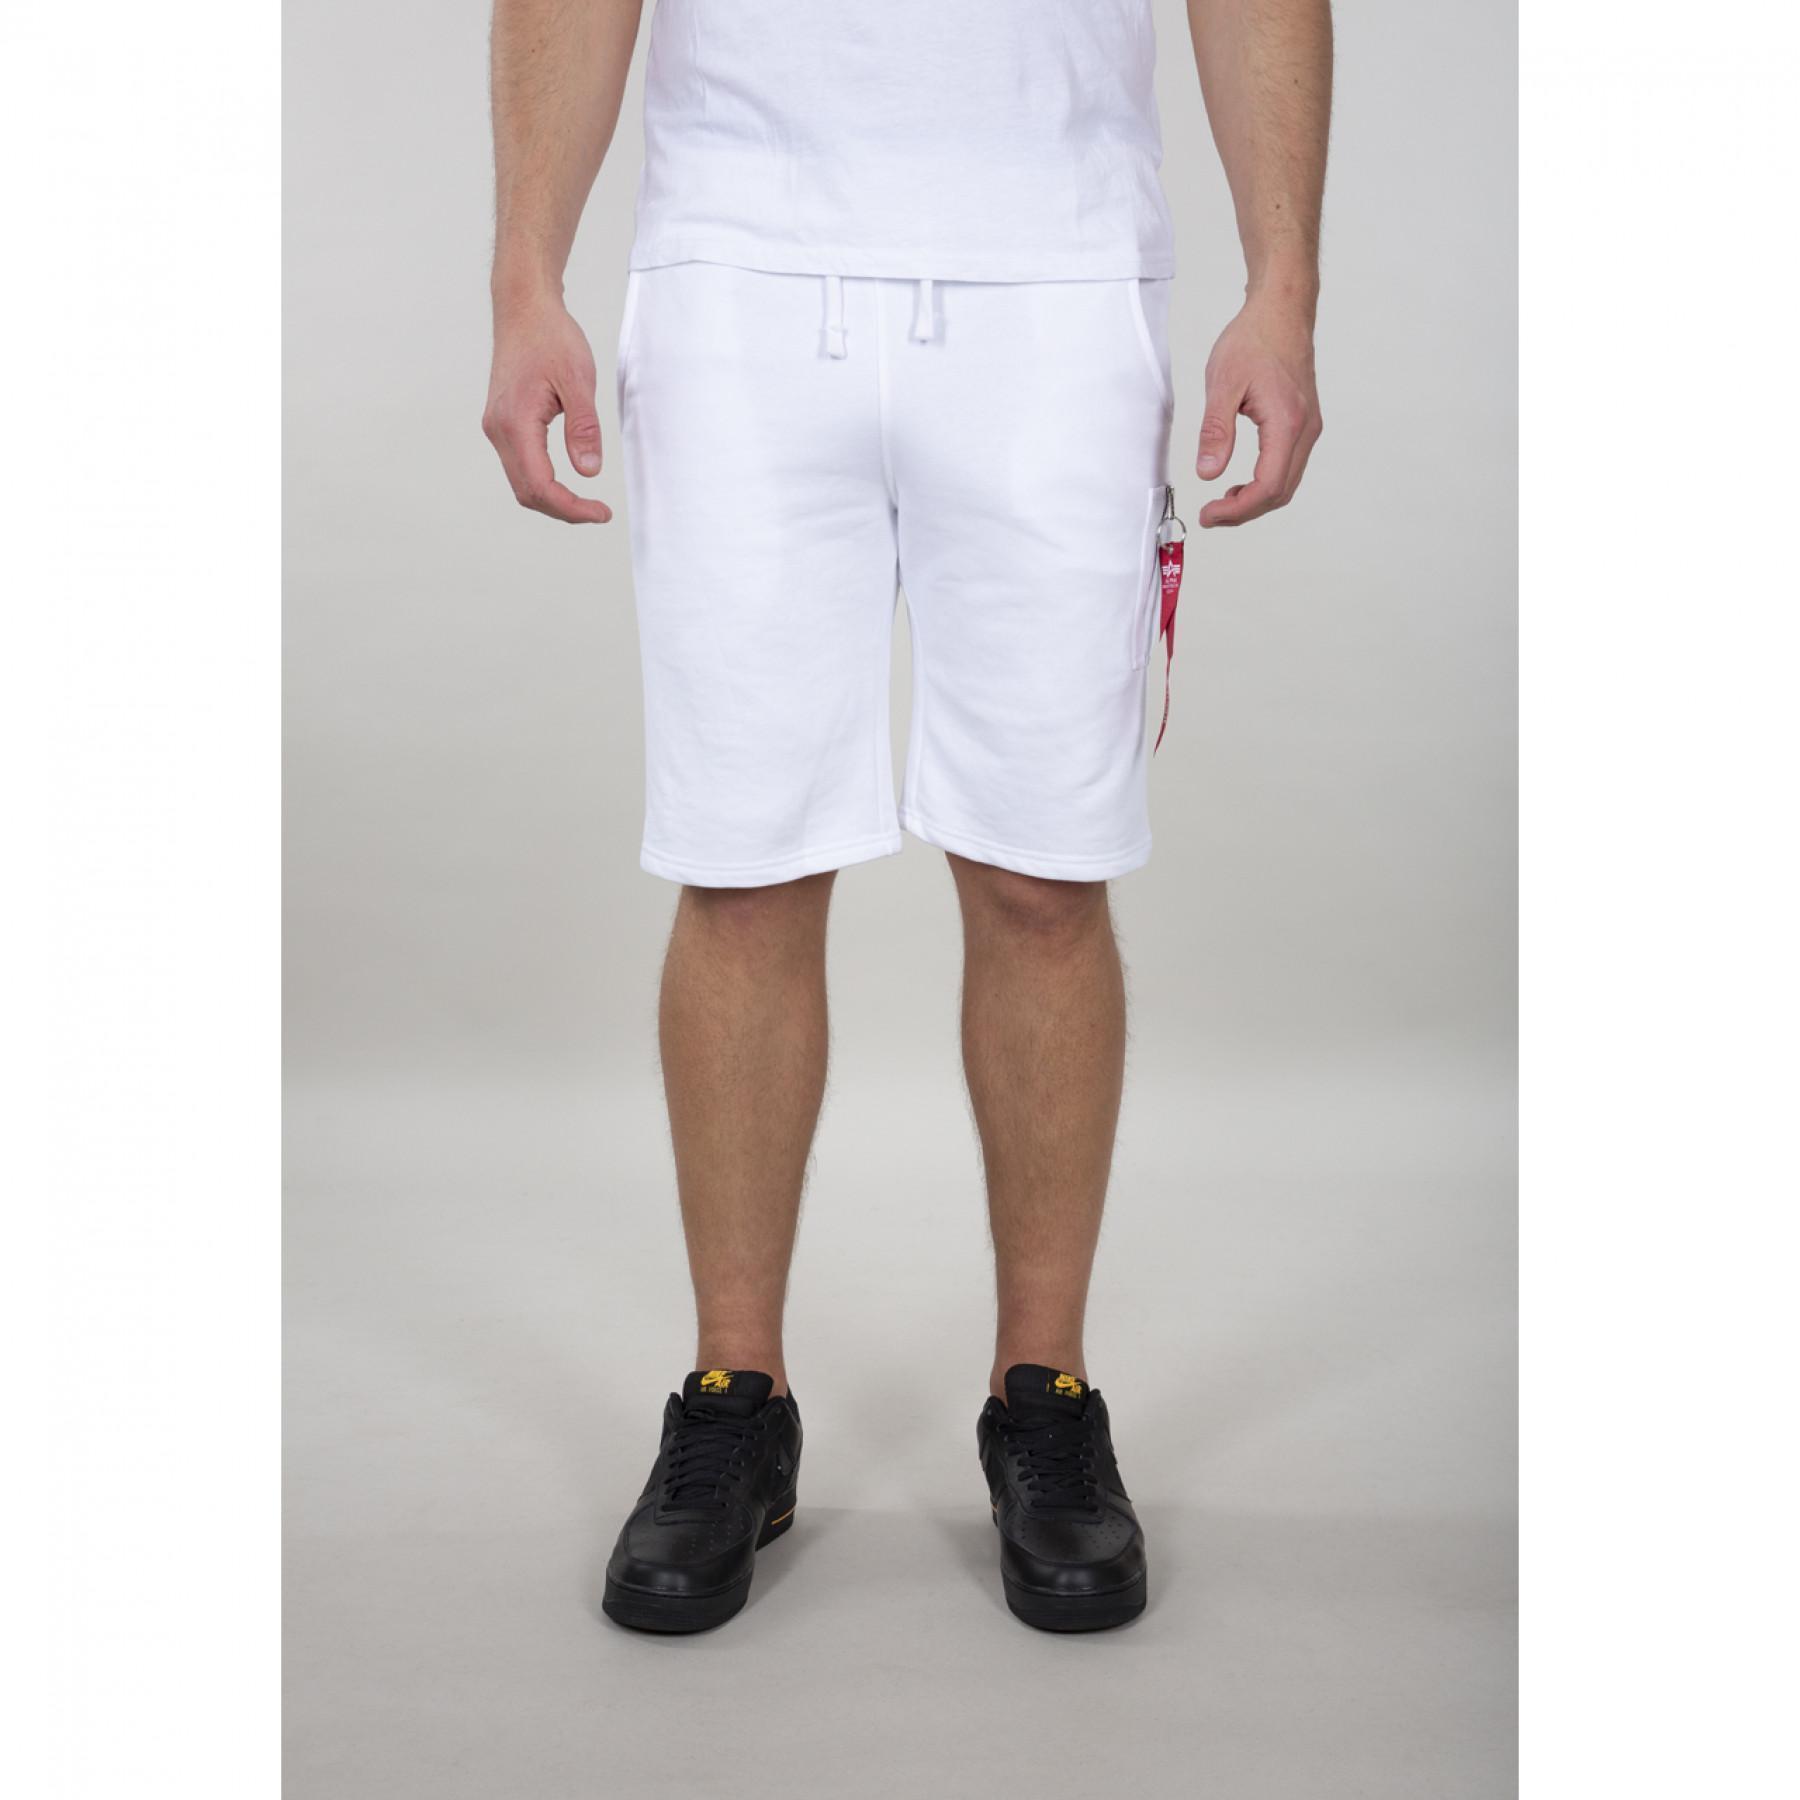 Cargo shorts Alpha Shorts Men - X-Fit Industries Clothing - 